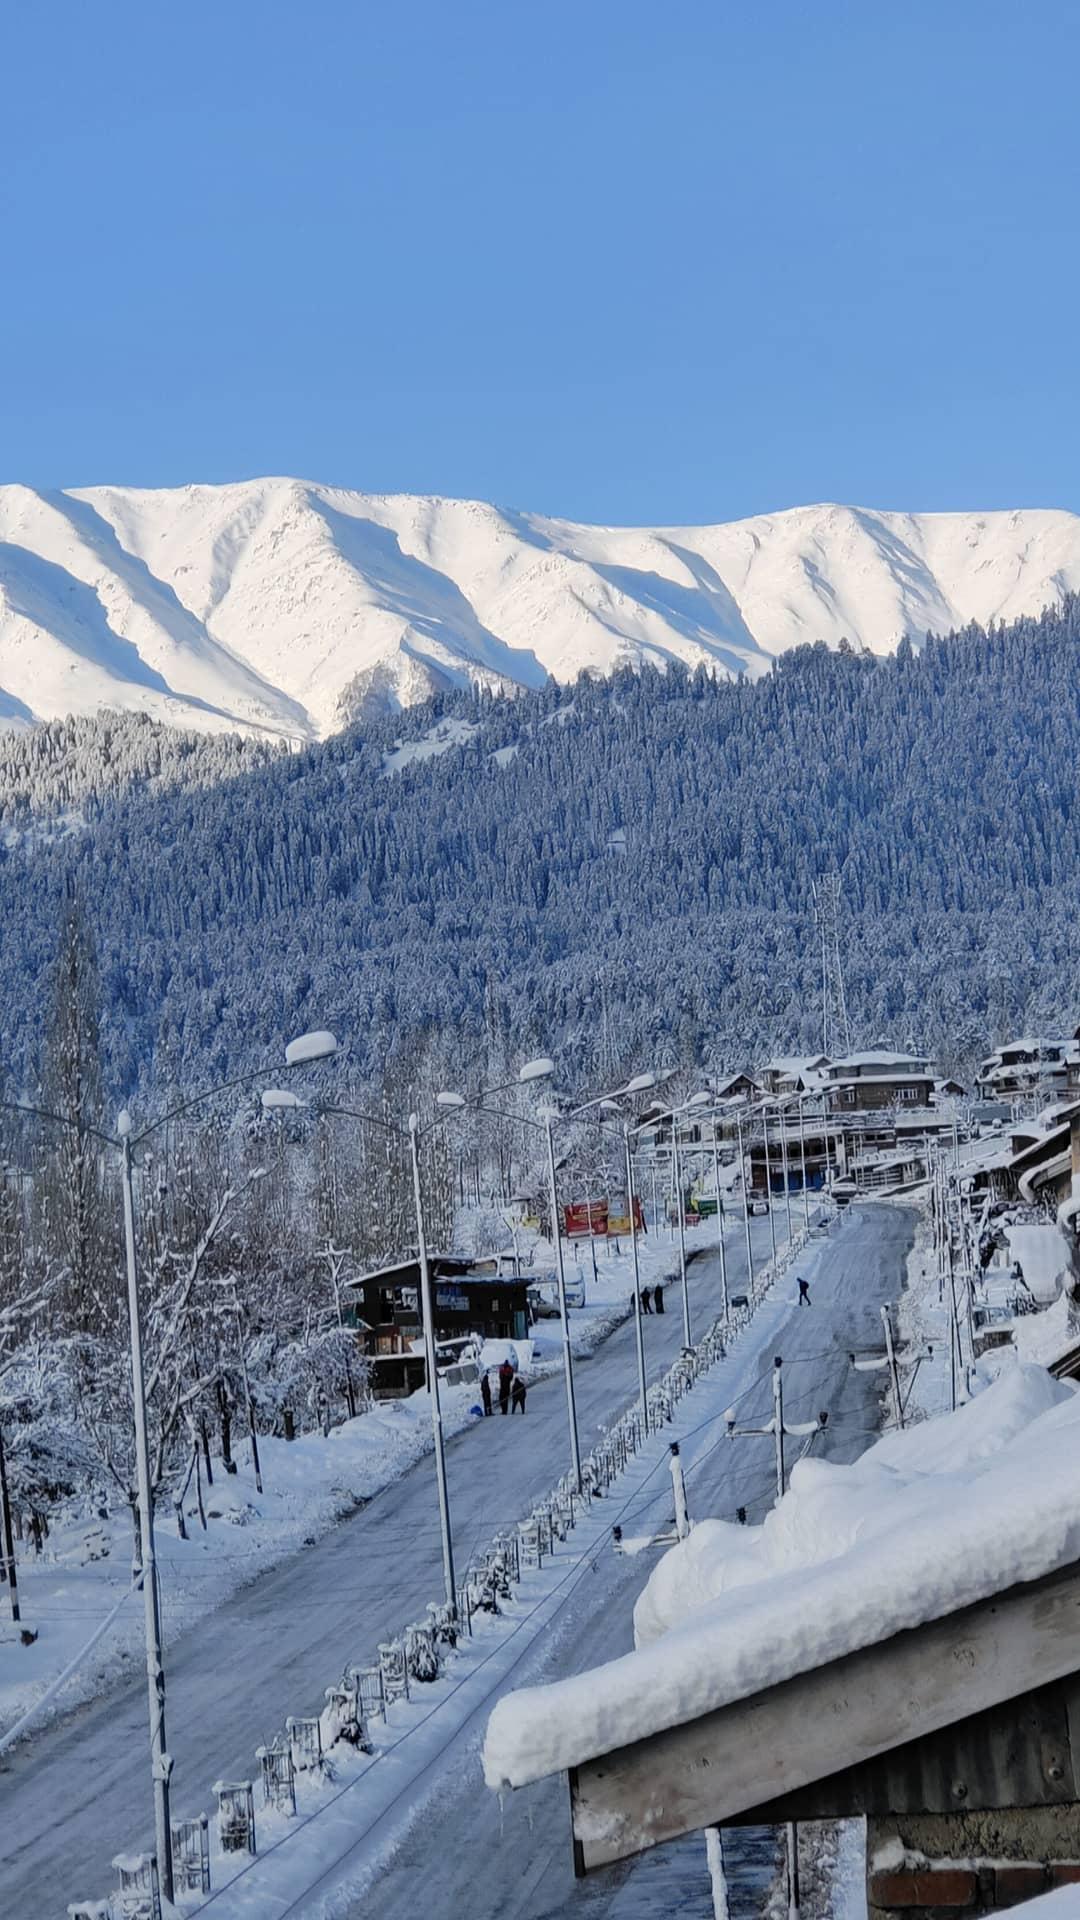 Kashmir's unusual winter without snow raises concerns, sounding alarm bells - Countryside Kashmir - Countryside Kashmir